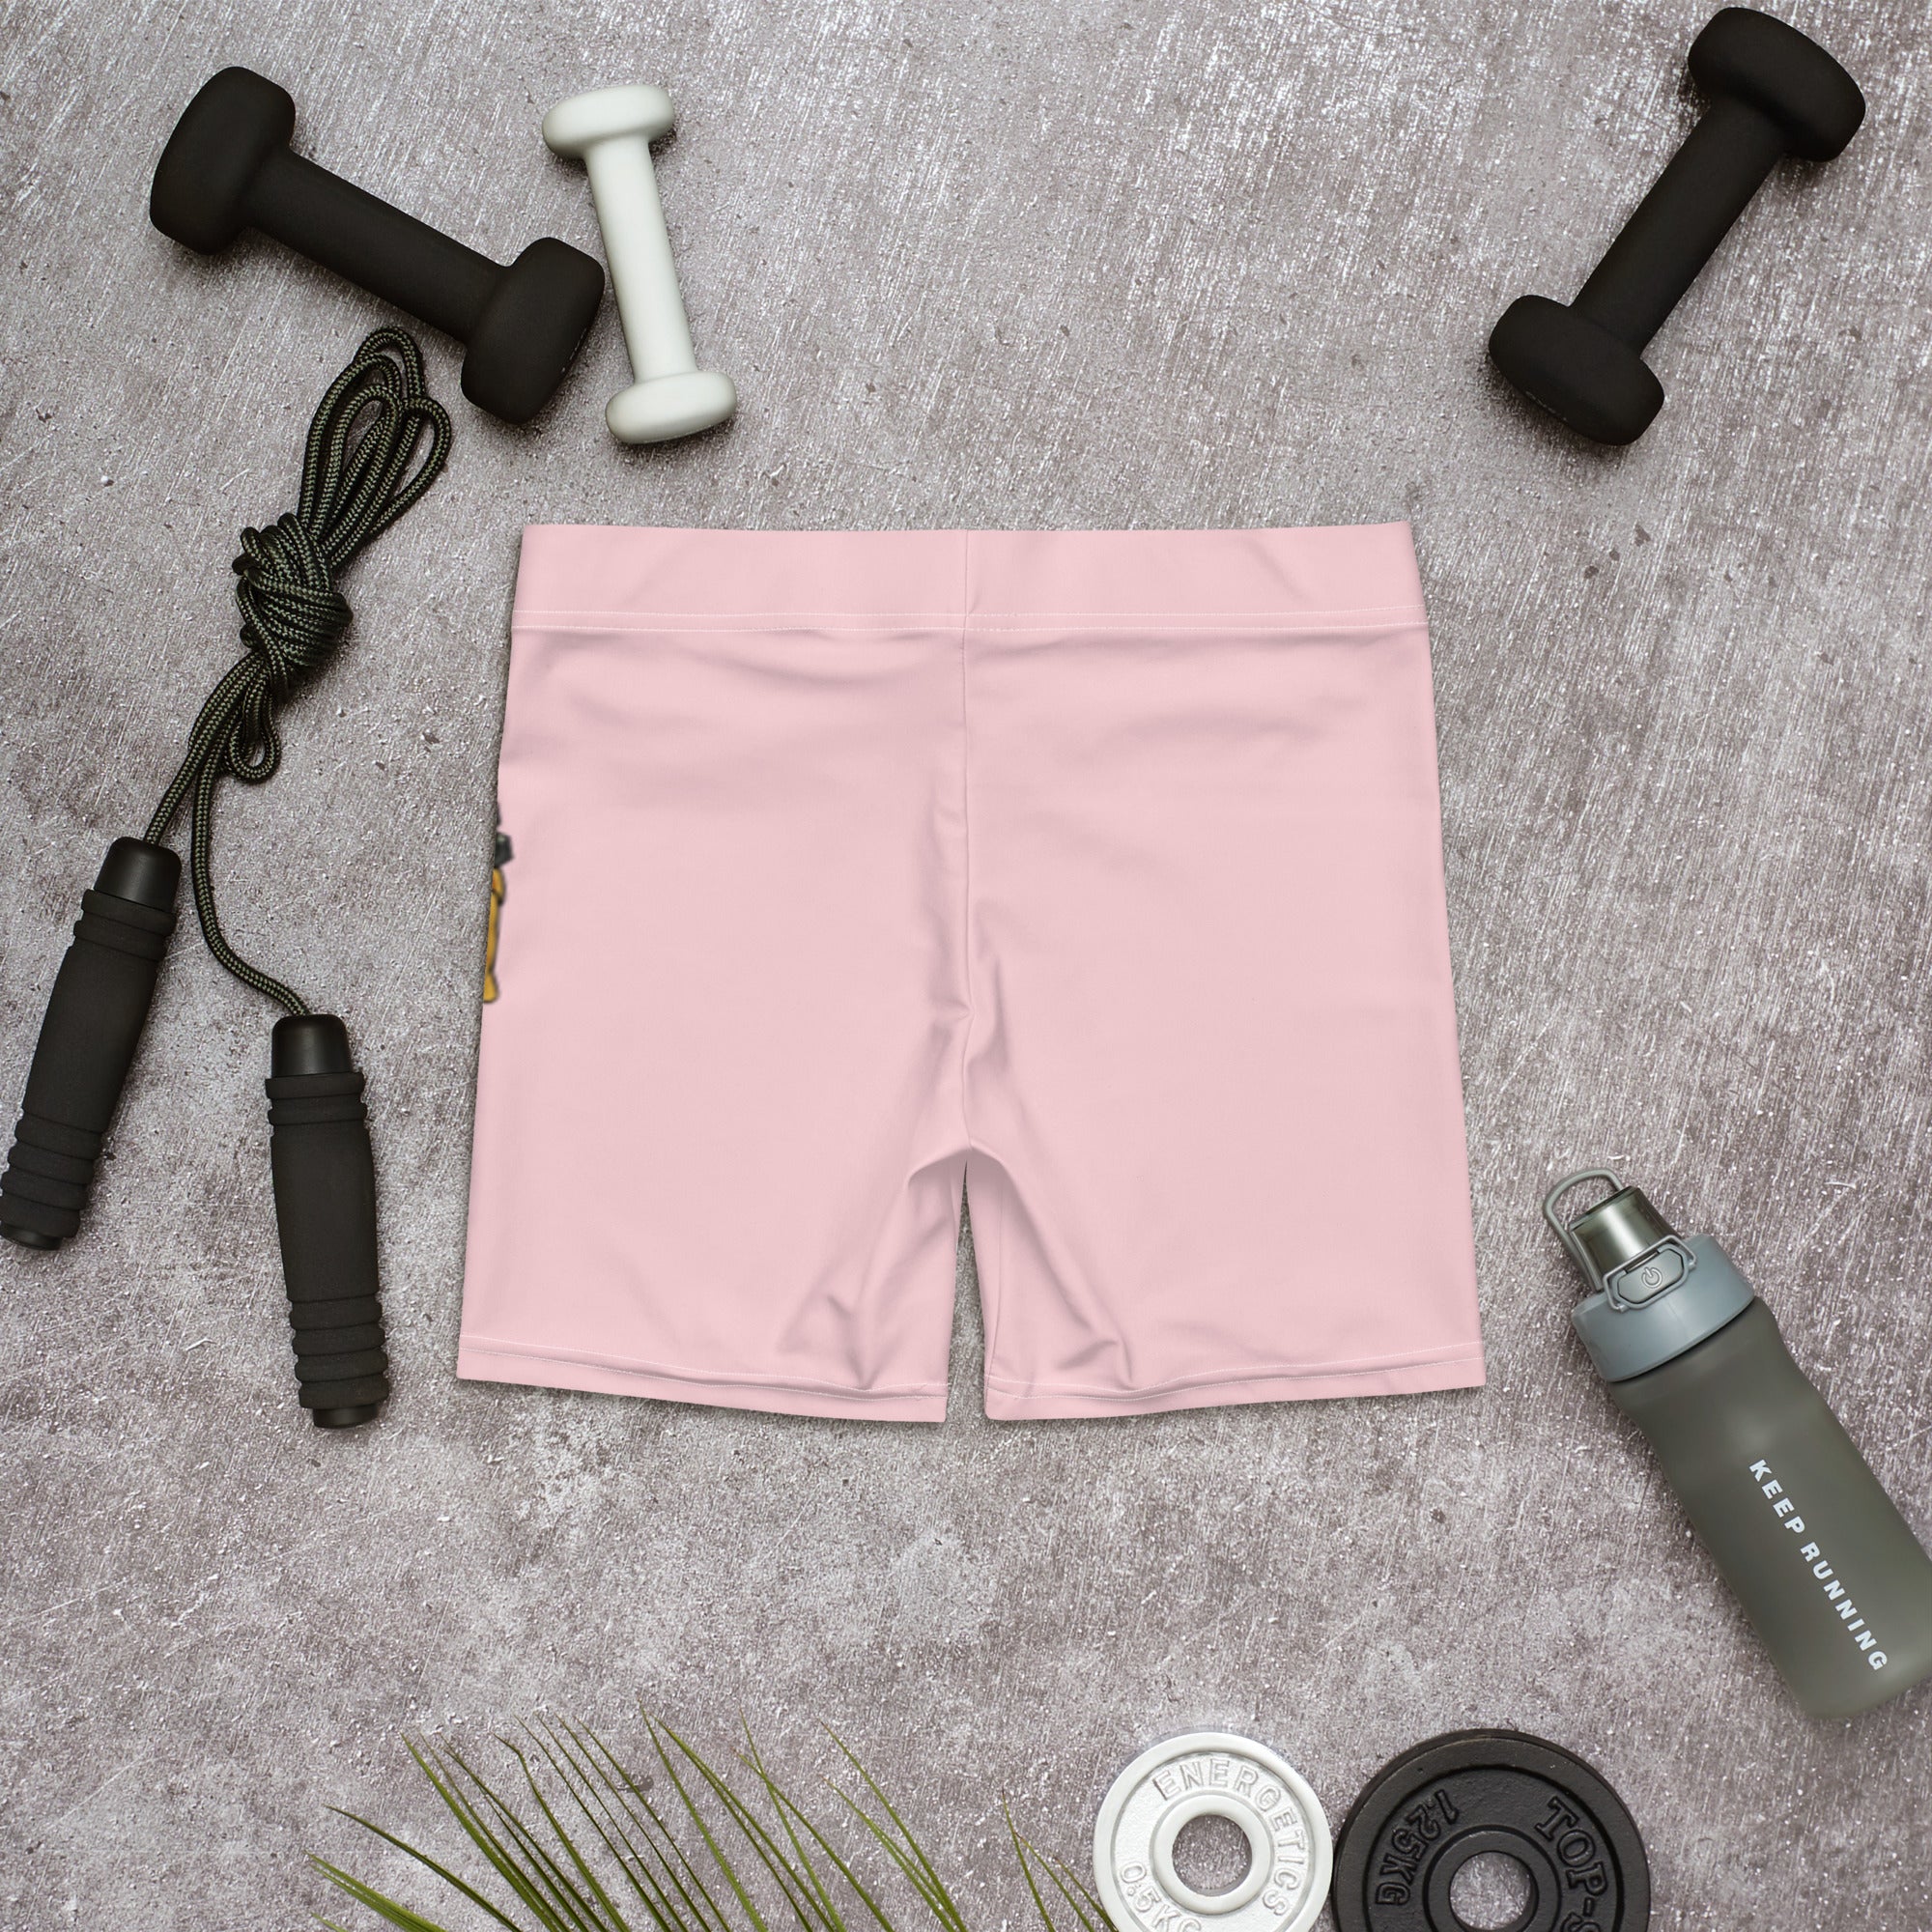 Same Goals Different Struggles Women’s Pale Pink 2 Shorts